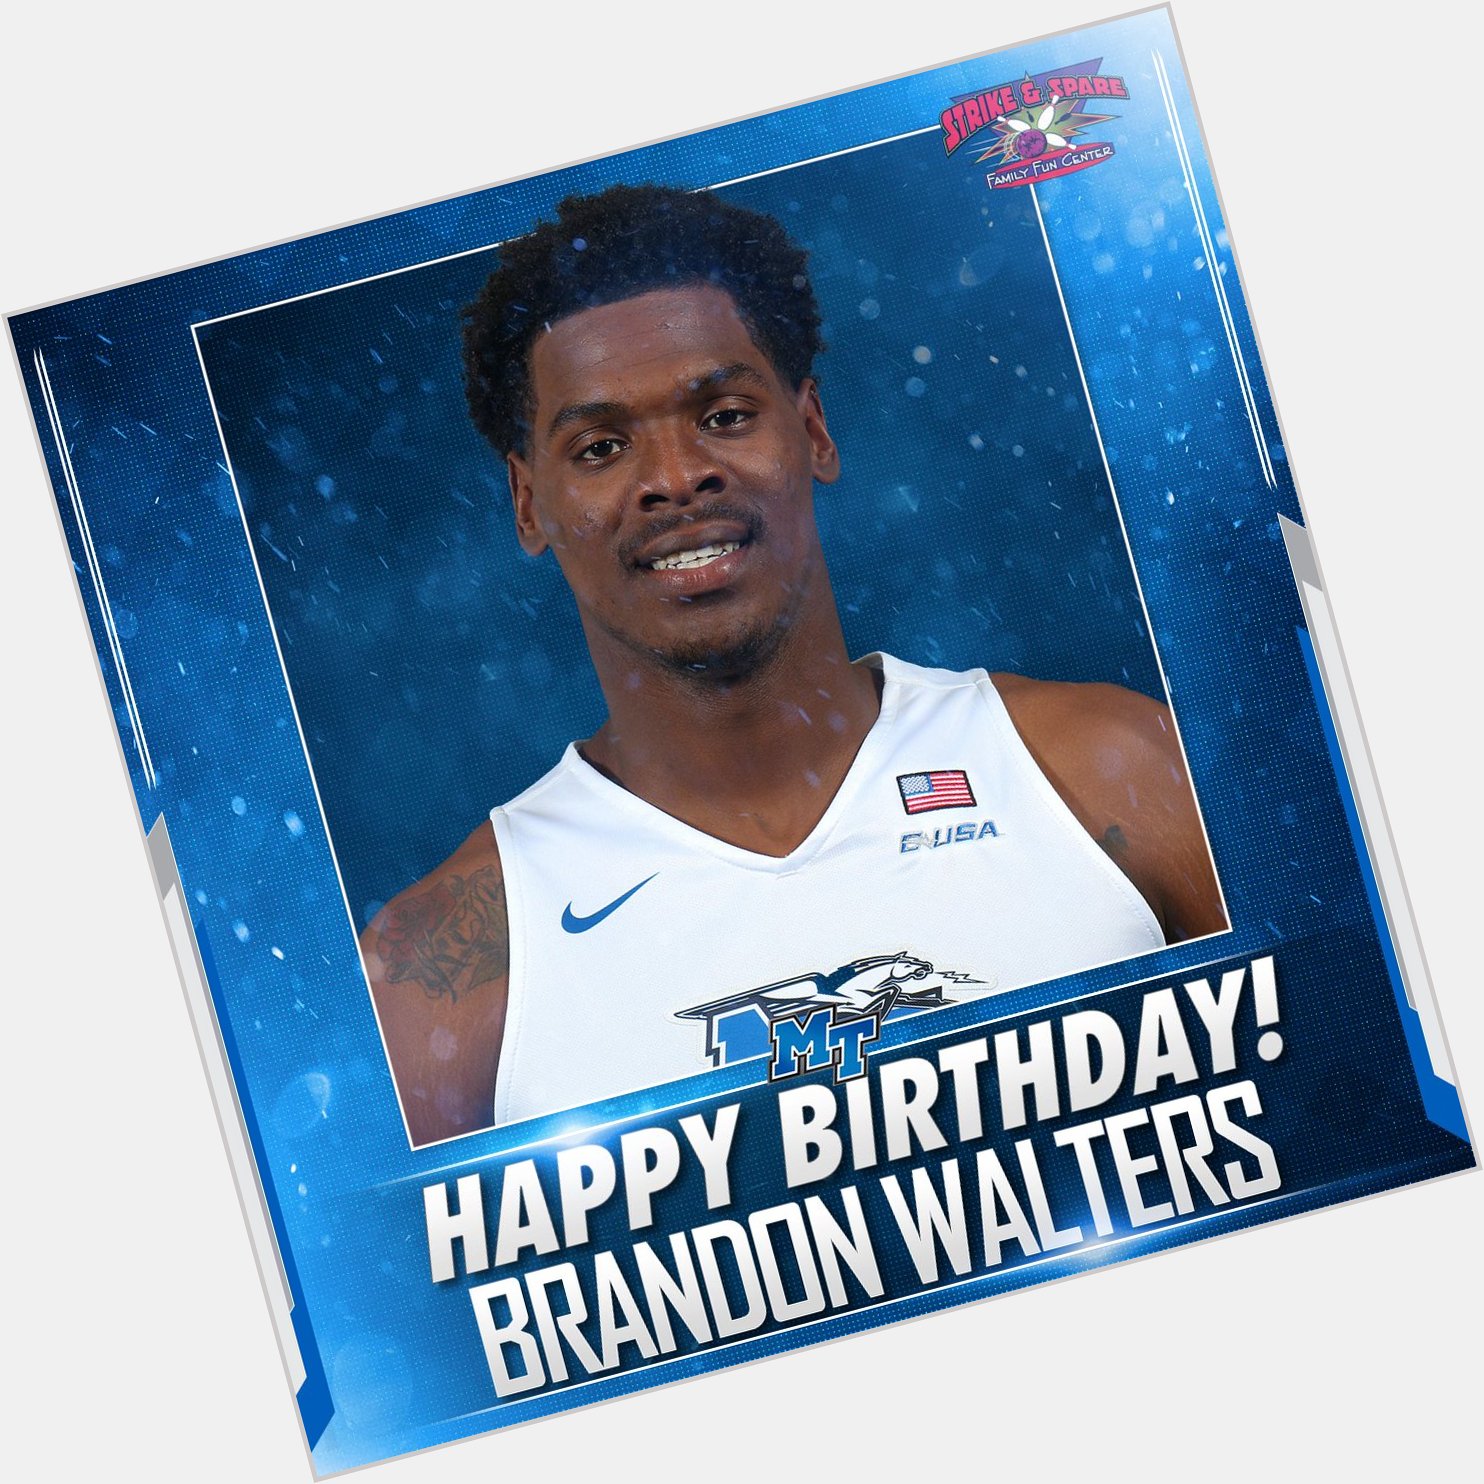 To wish Brandon Walters a Happy Birthday! 